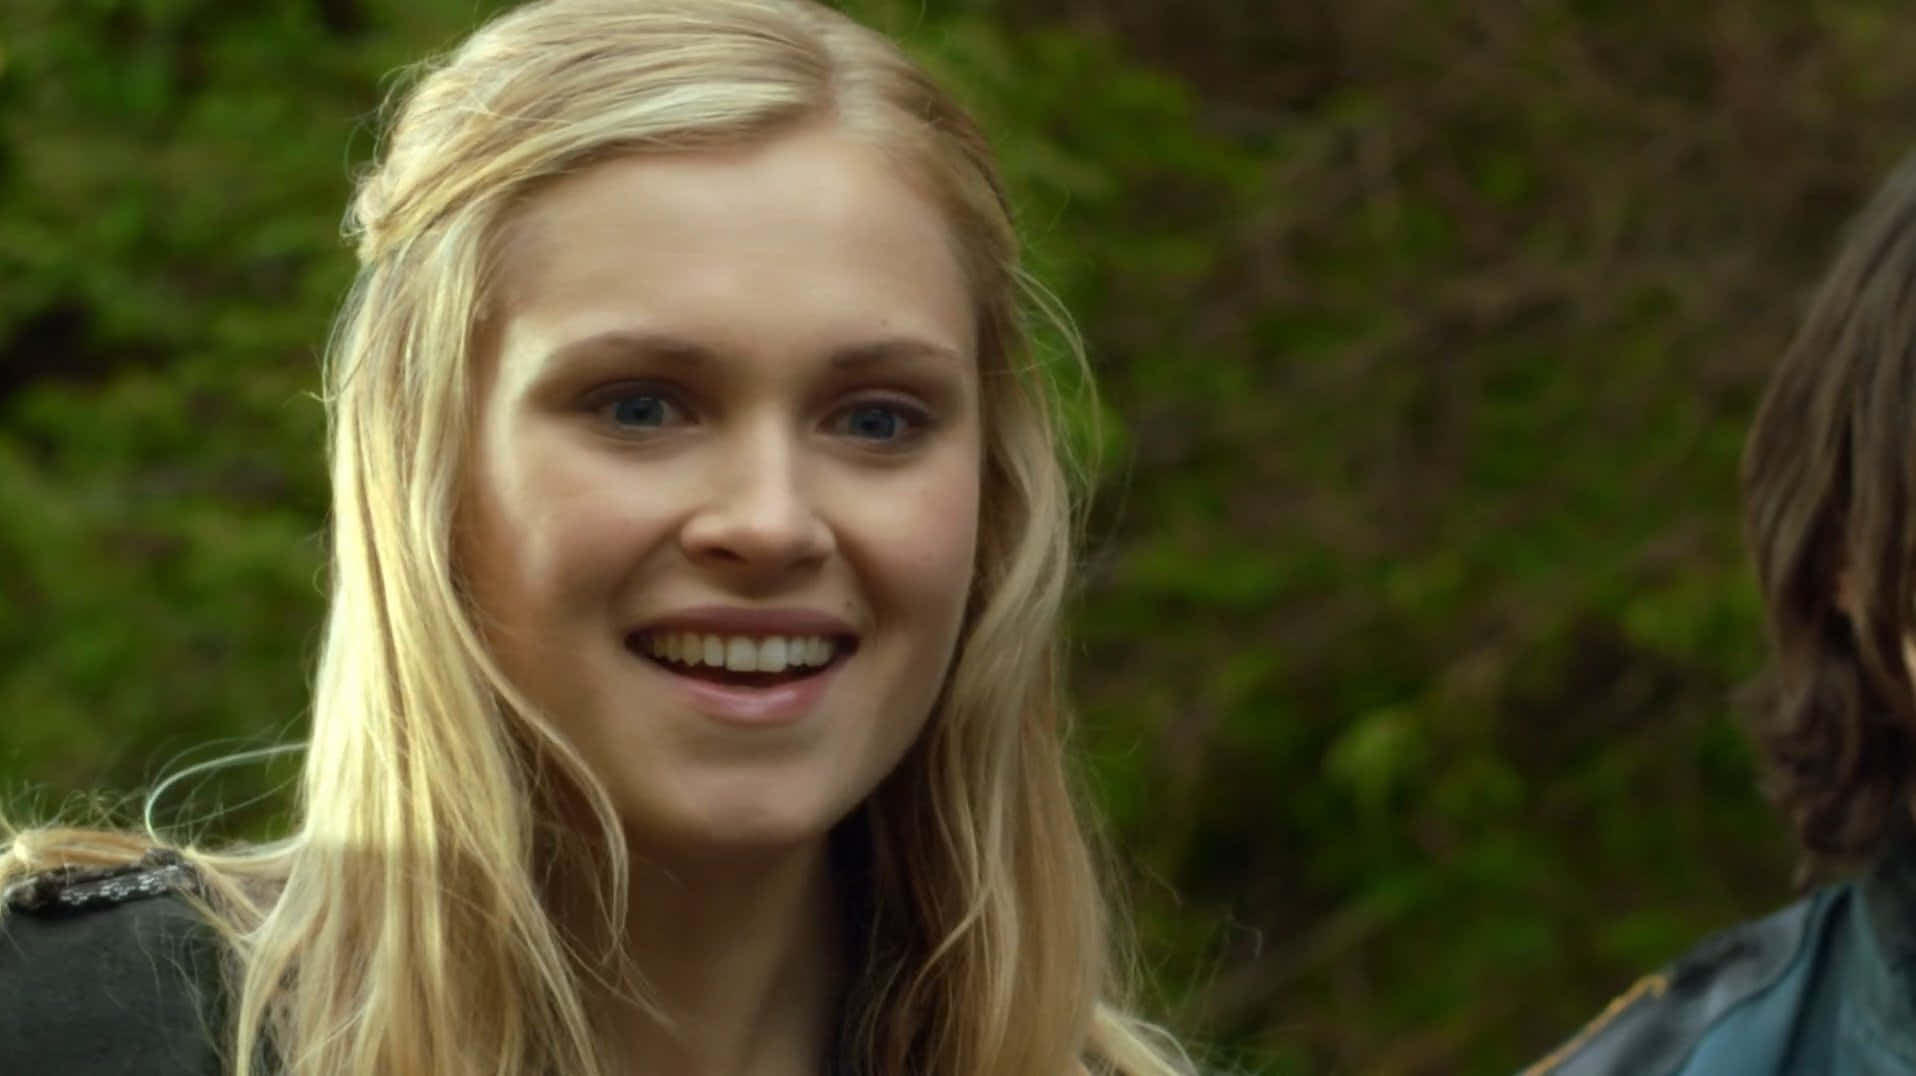 Blonde Actress Smiling Outdoors Wallpaper